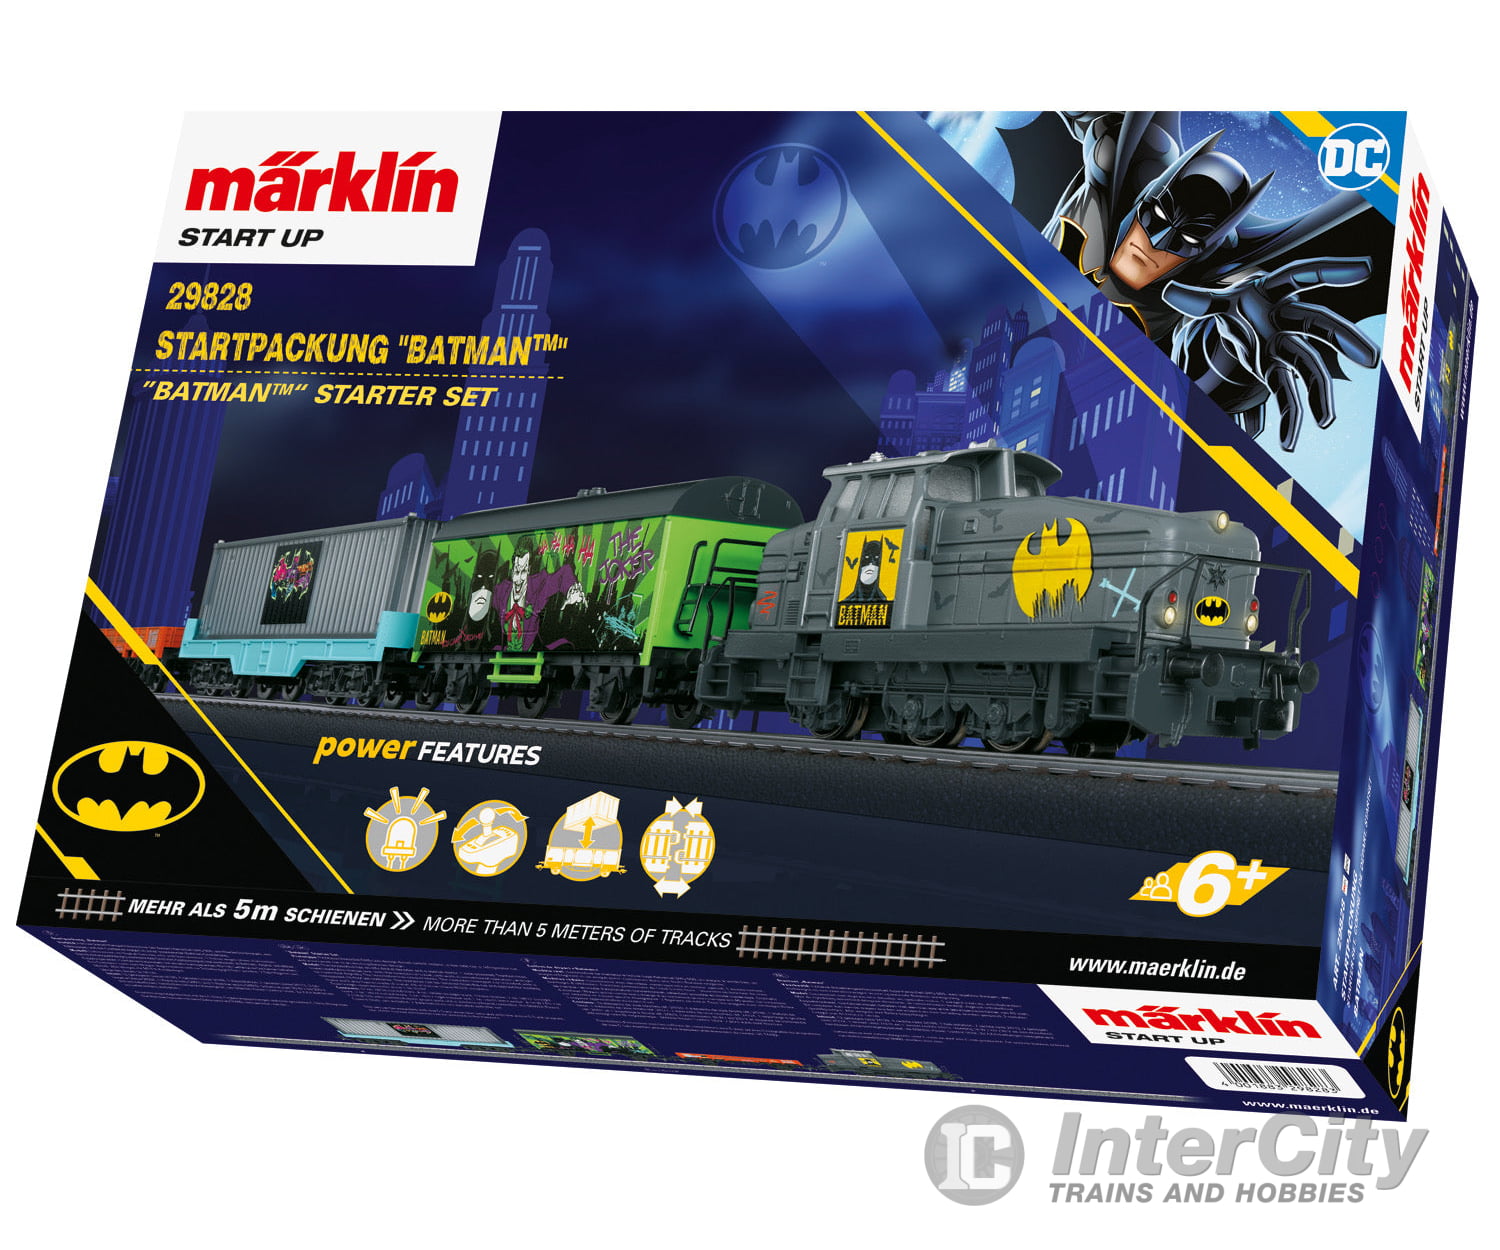 Marklin 29828 Marklin Start up - "Batman" Starter Set - Default Title (IC-MARK-29828)